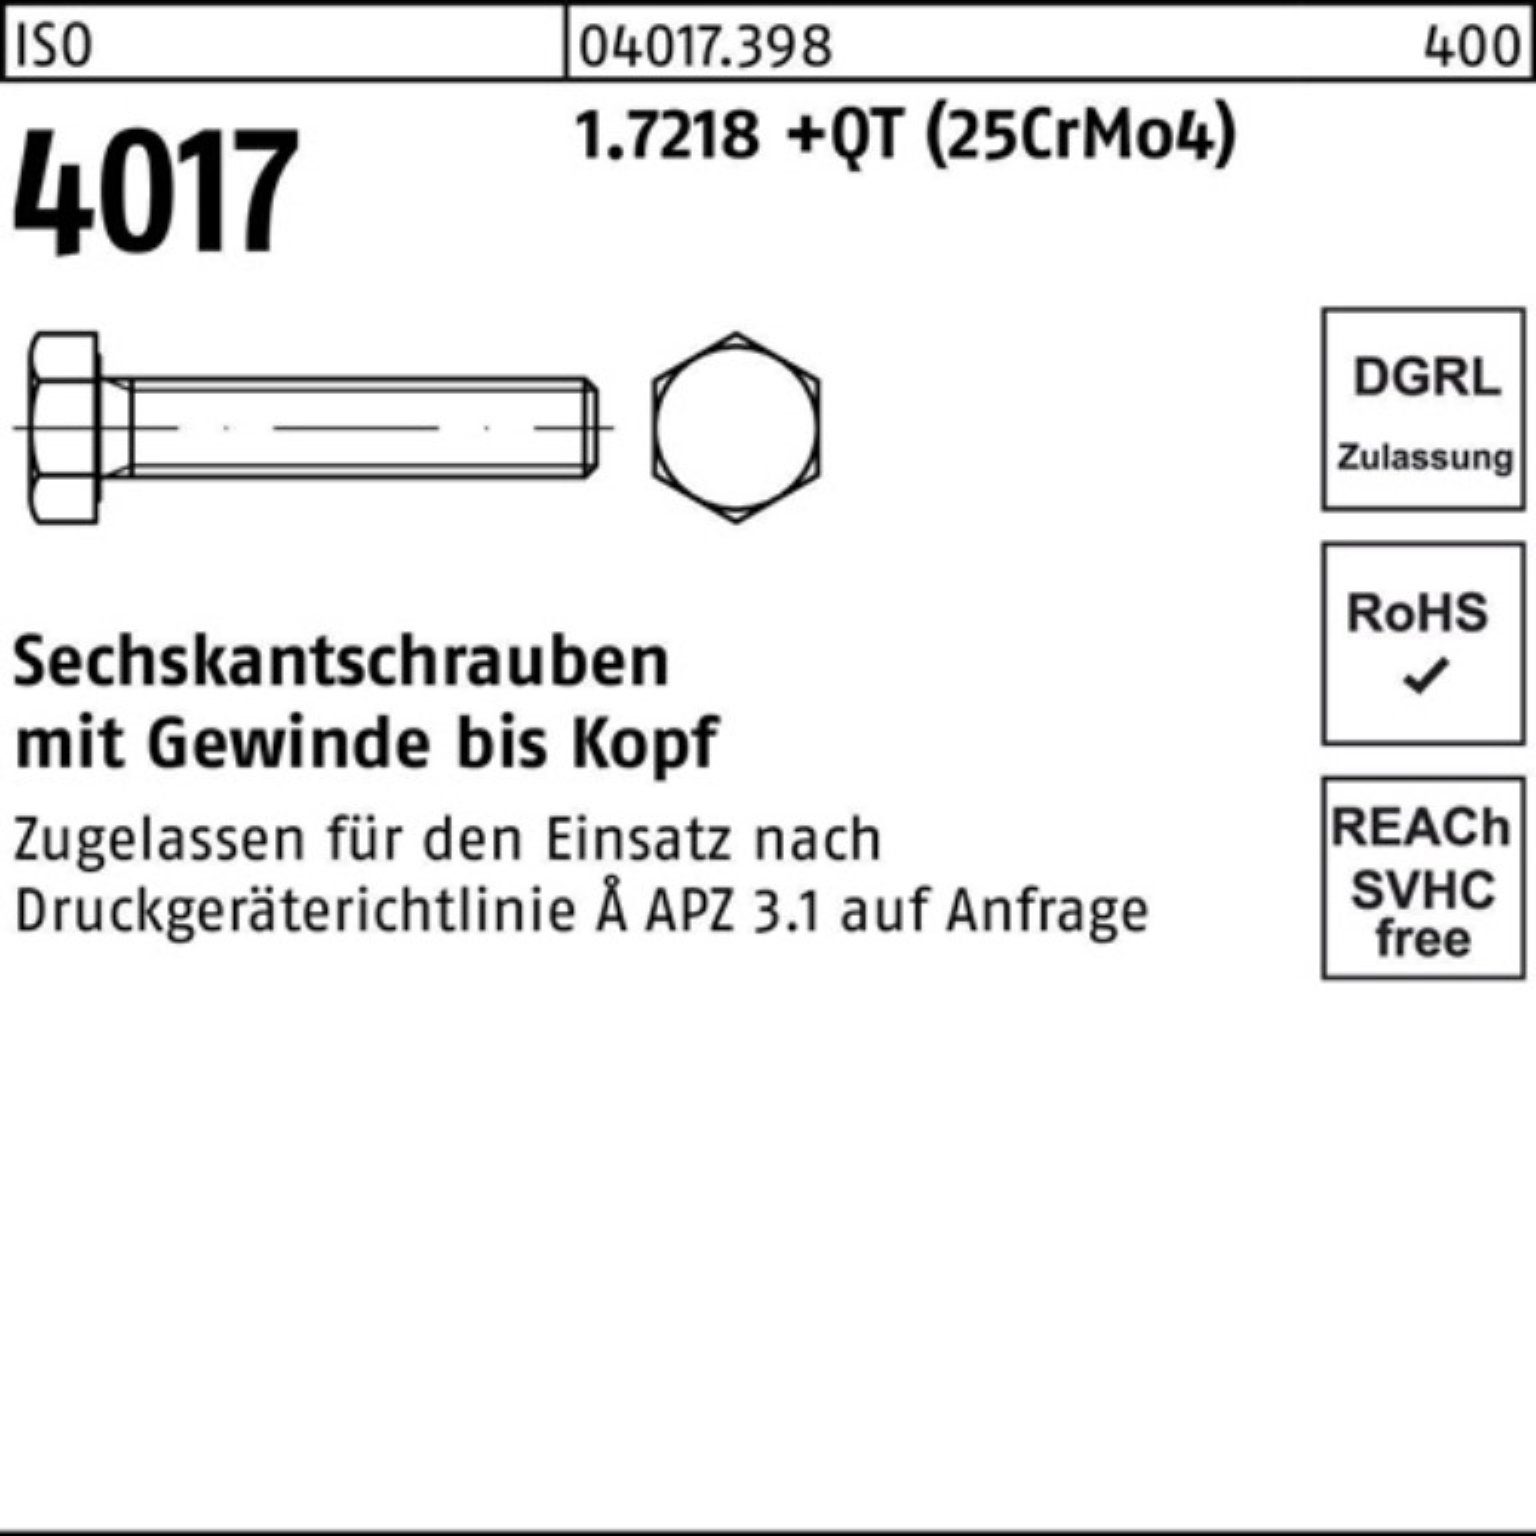 Bufab Sechskantschraube 100er Pack Sechskantschraube +QT 1.7218 ISO 4017 VG (25CrMo4) 40 M20x